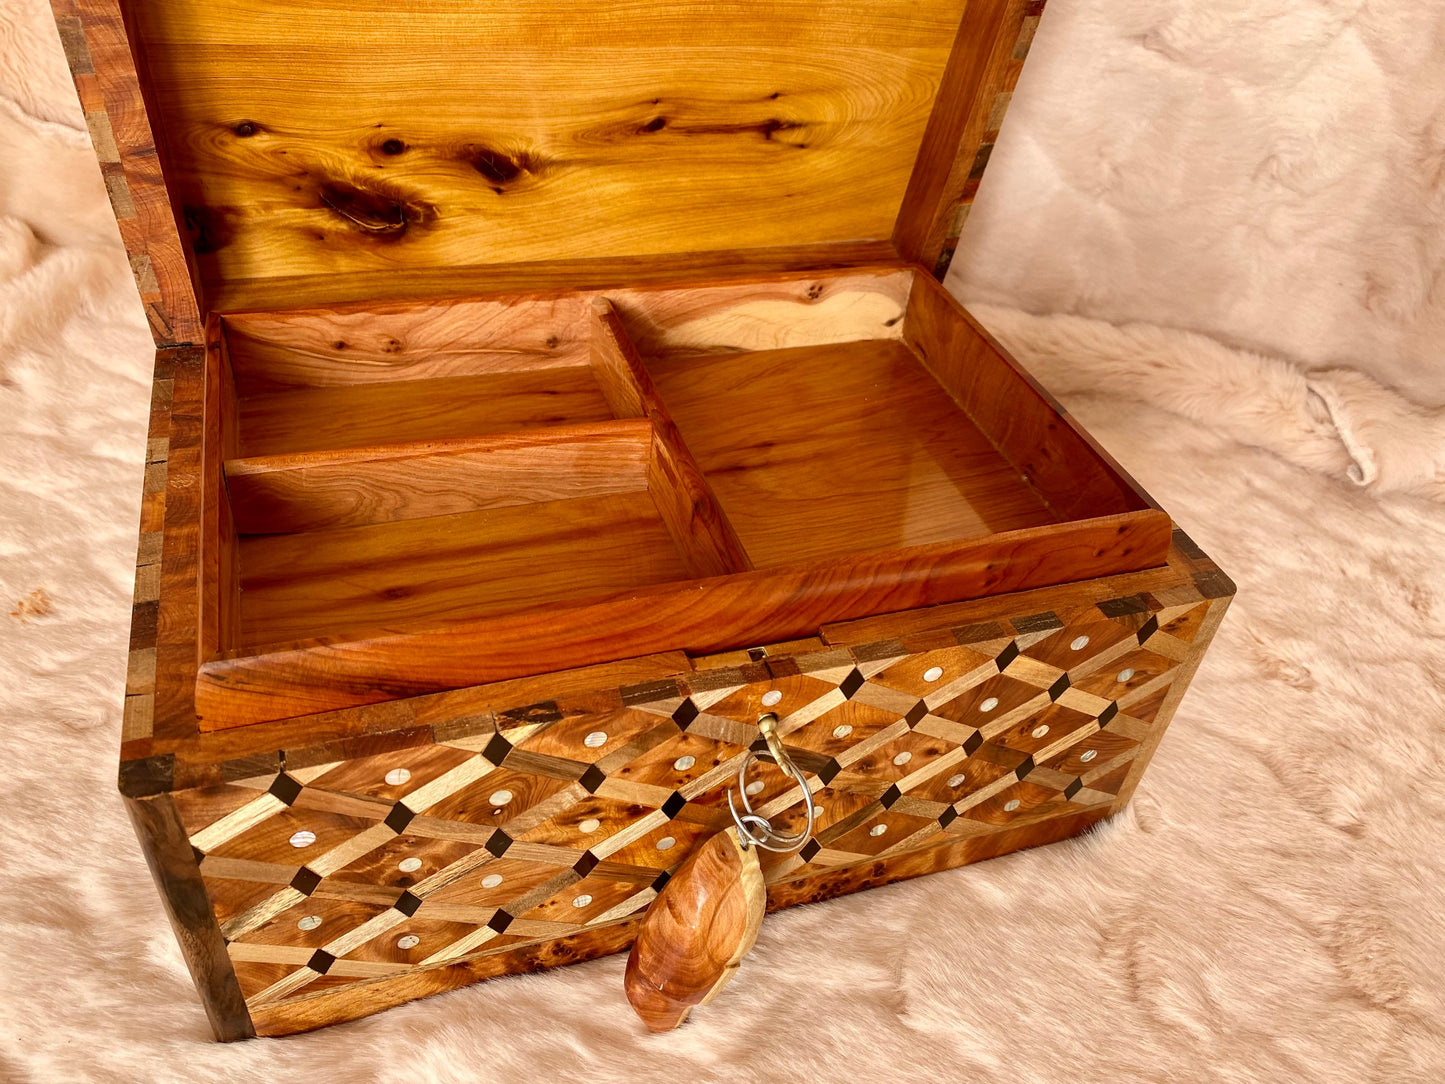 12x8 Solid lockable Jewelry Wood Box, large jewellery Thuya Burl wooden Box Keepsake Storage Inlaid with Mother of pearls,walnut,lemon wood